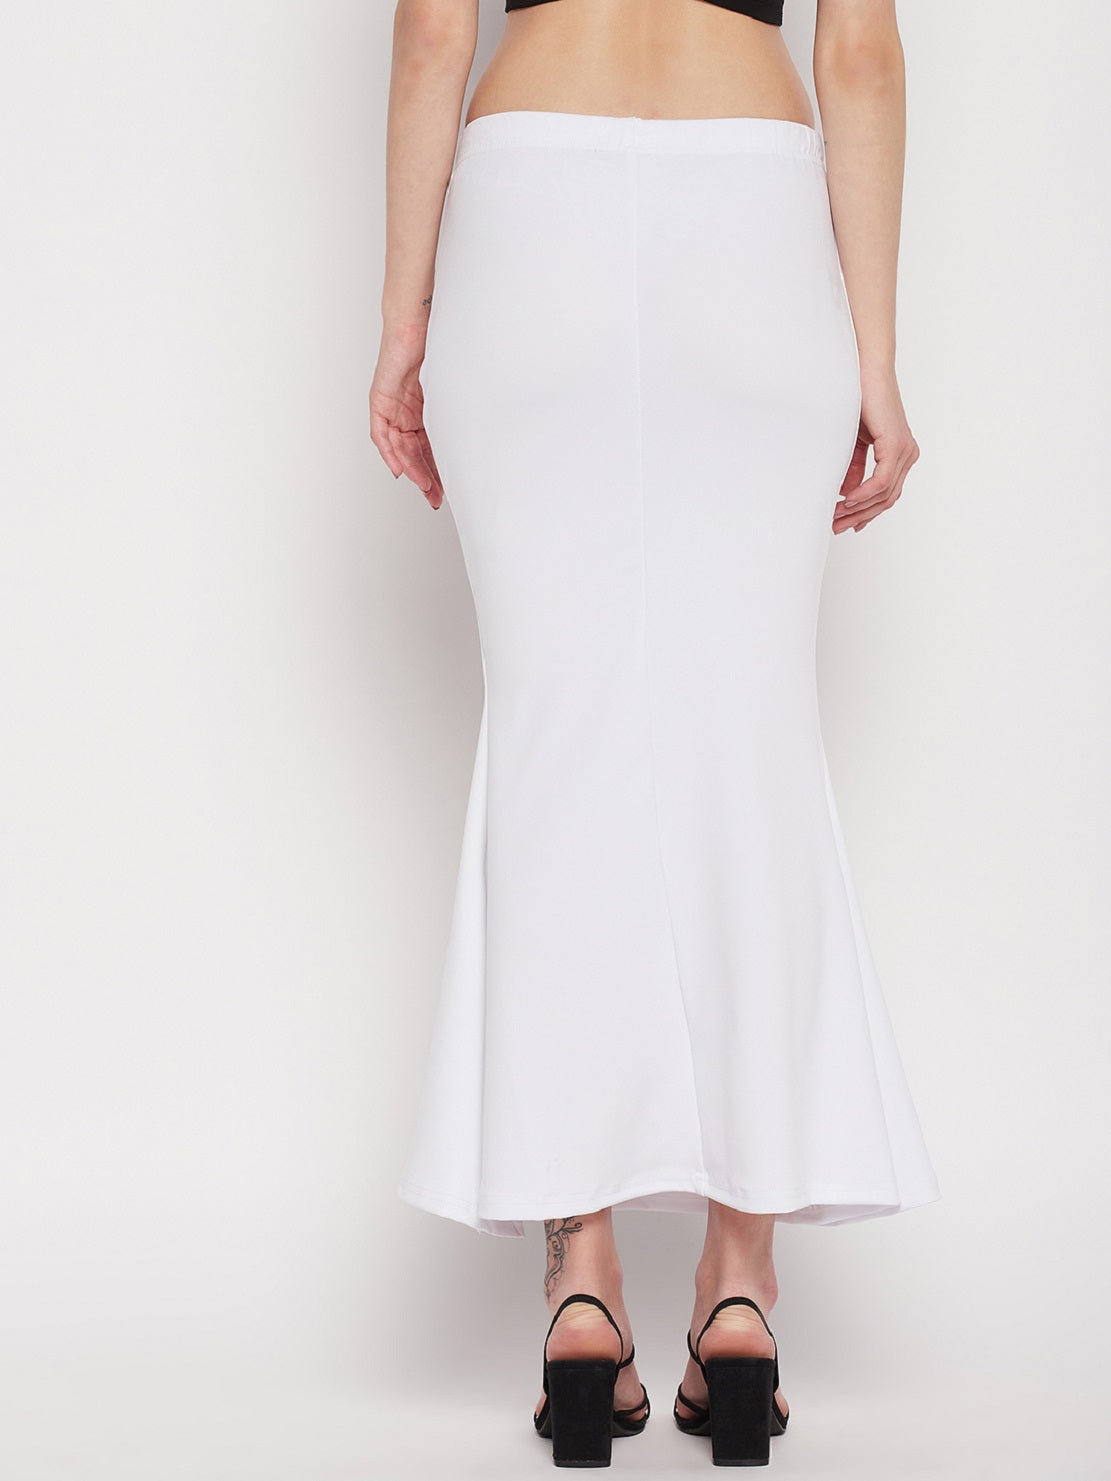 CRAFTSTRIBE Women Saree Petticoat Inskirt Underskirt Skirt White Sari  Cotton Innerwear